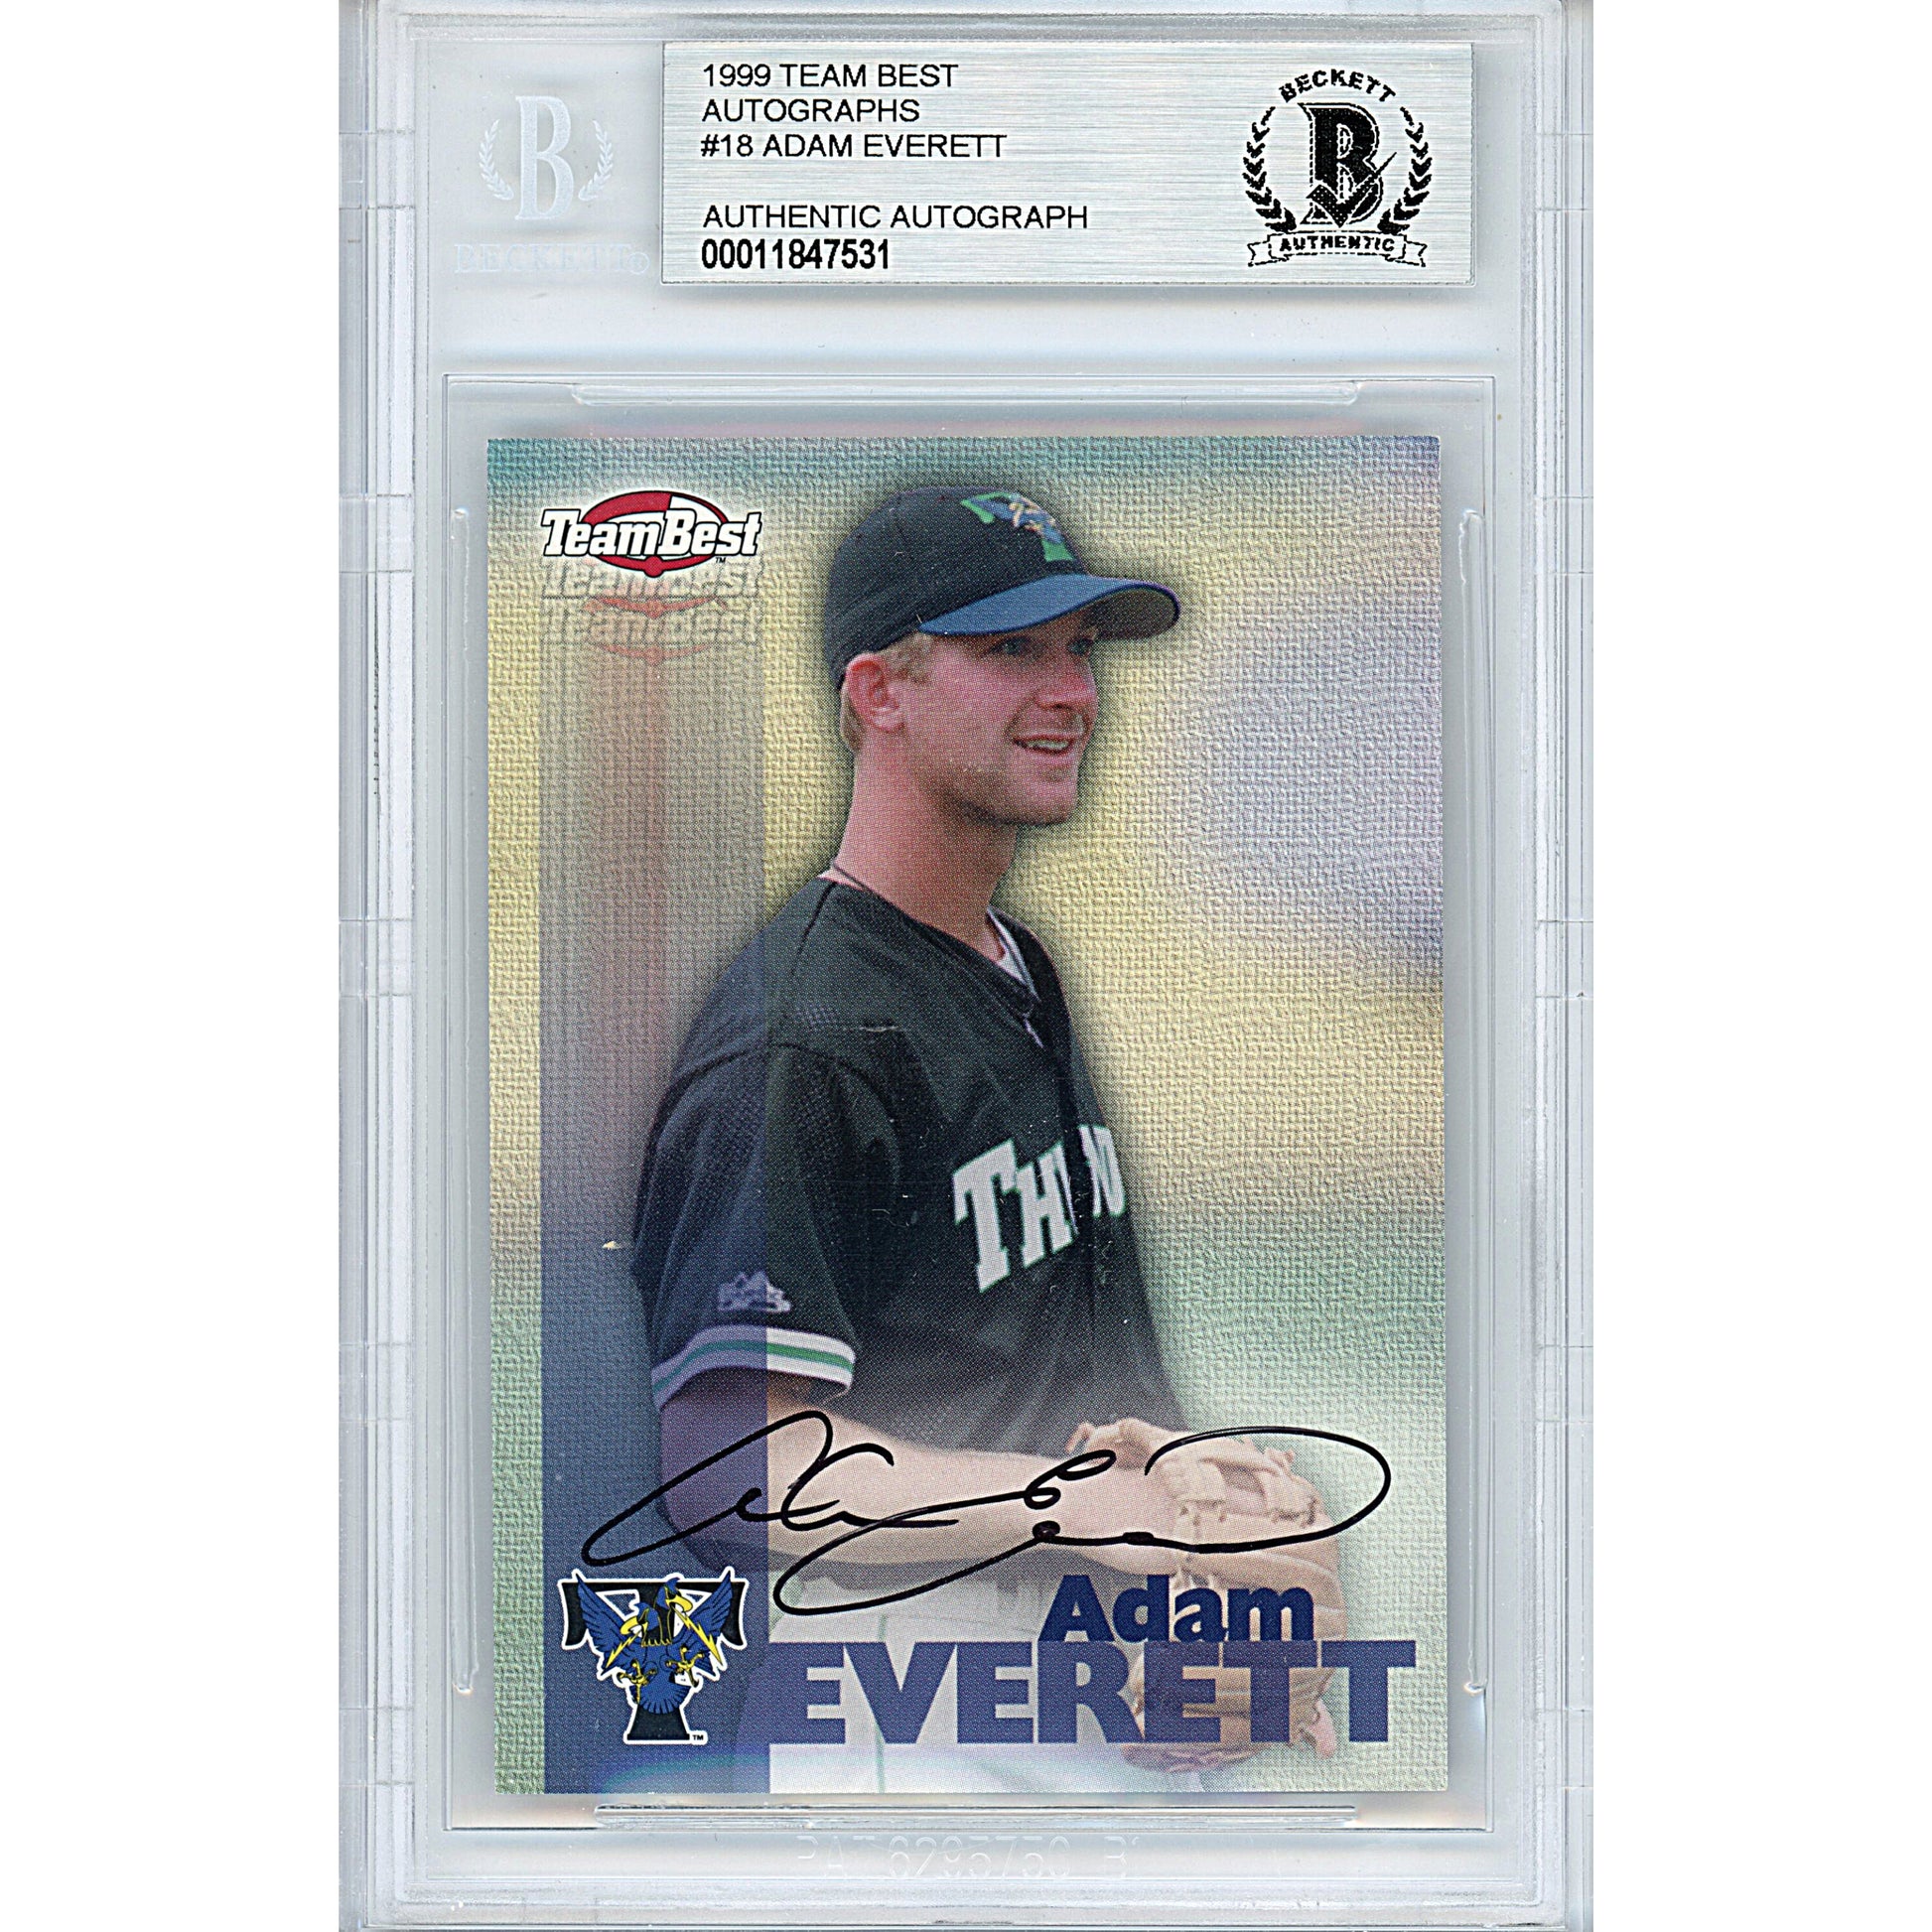 Baseballs- Autographed- Adam Everett Signed Houston Astros 1999 Team Best Autographs Insert Baseball Trading Card - Beckett BGS BAS Slabbed - Encapsulated 00011847531 - 101